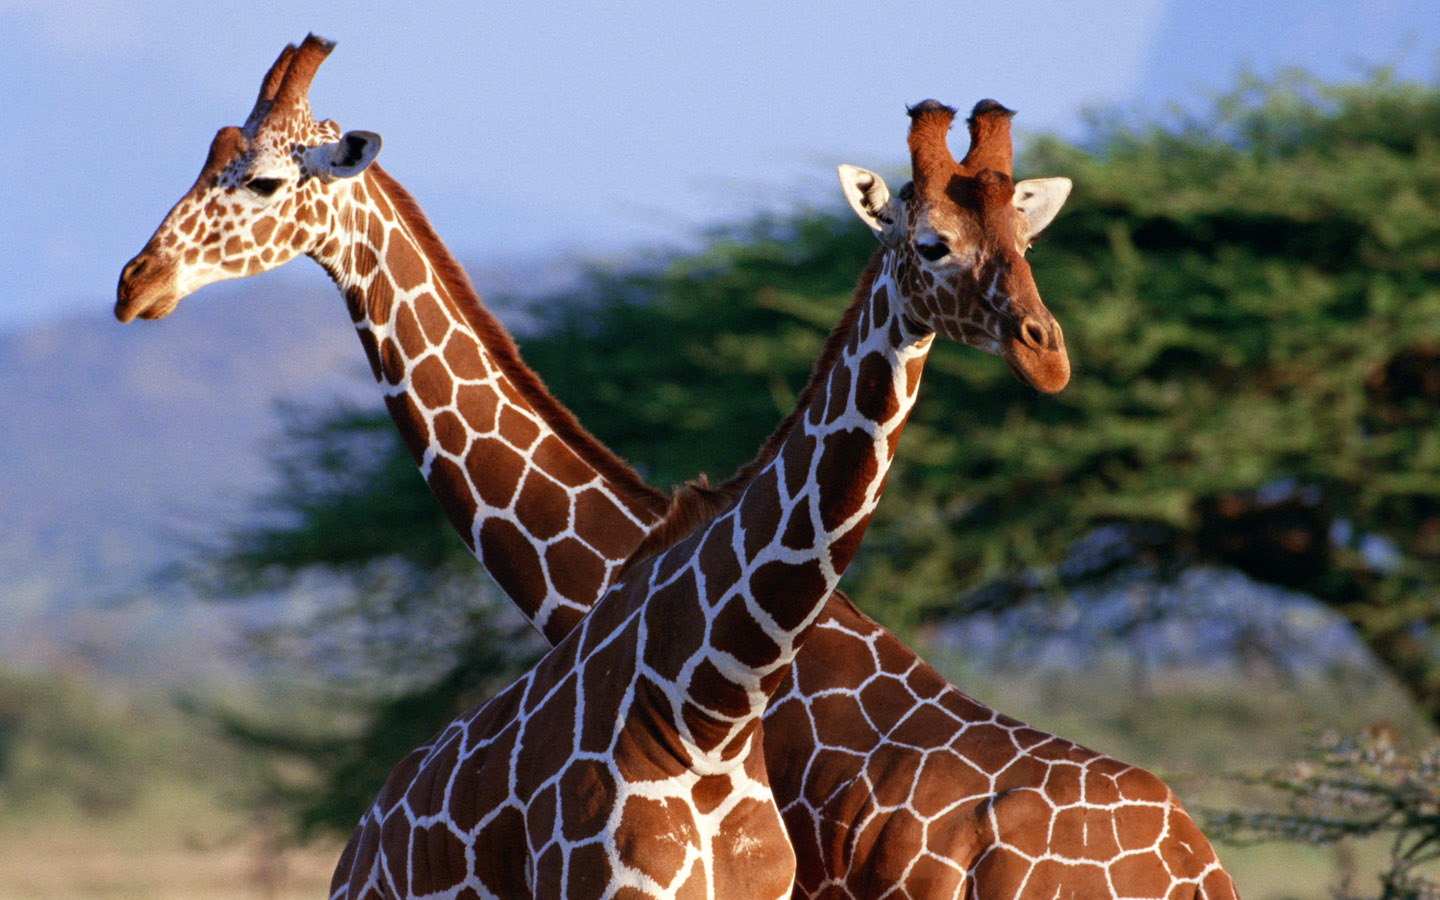 Zebra and giraffe 1440*900 widescreen Desktop Wallpapers and stock ...